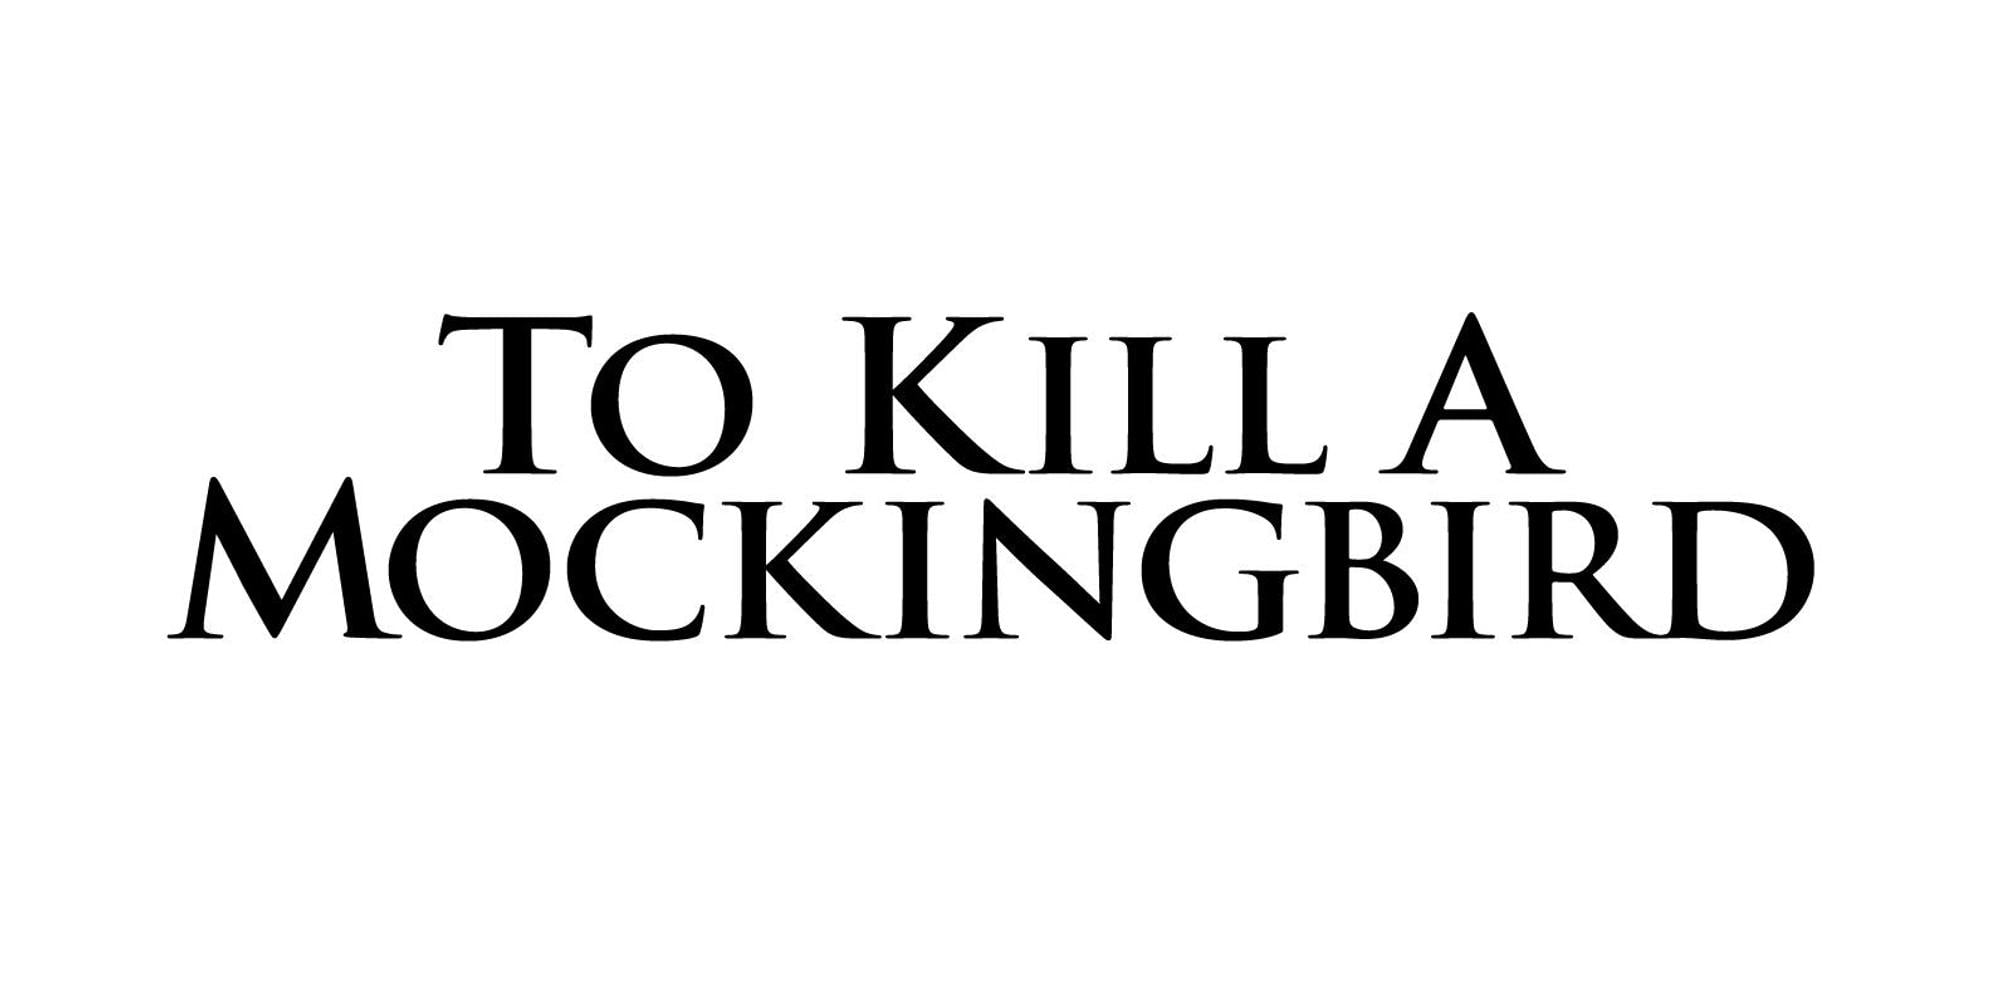 To Kill A Mockingbird (60th Anniversary Edition) (blu-ray)(1962) : Target